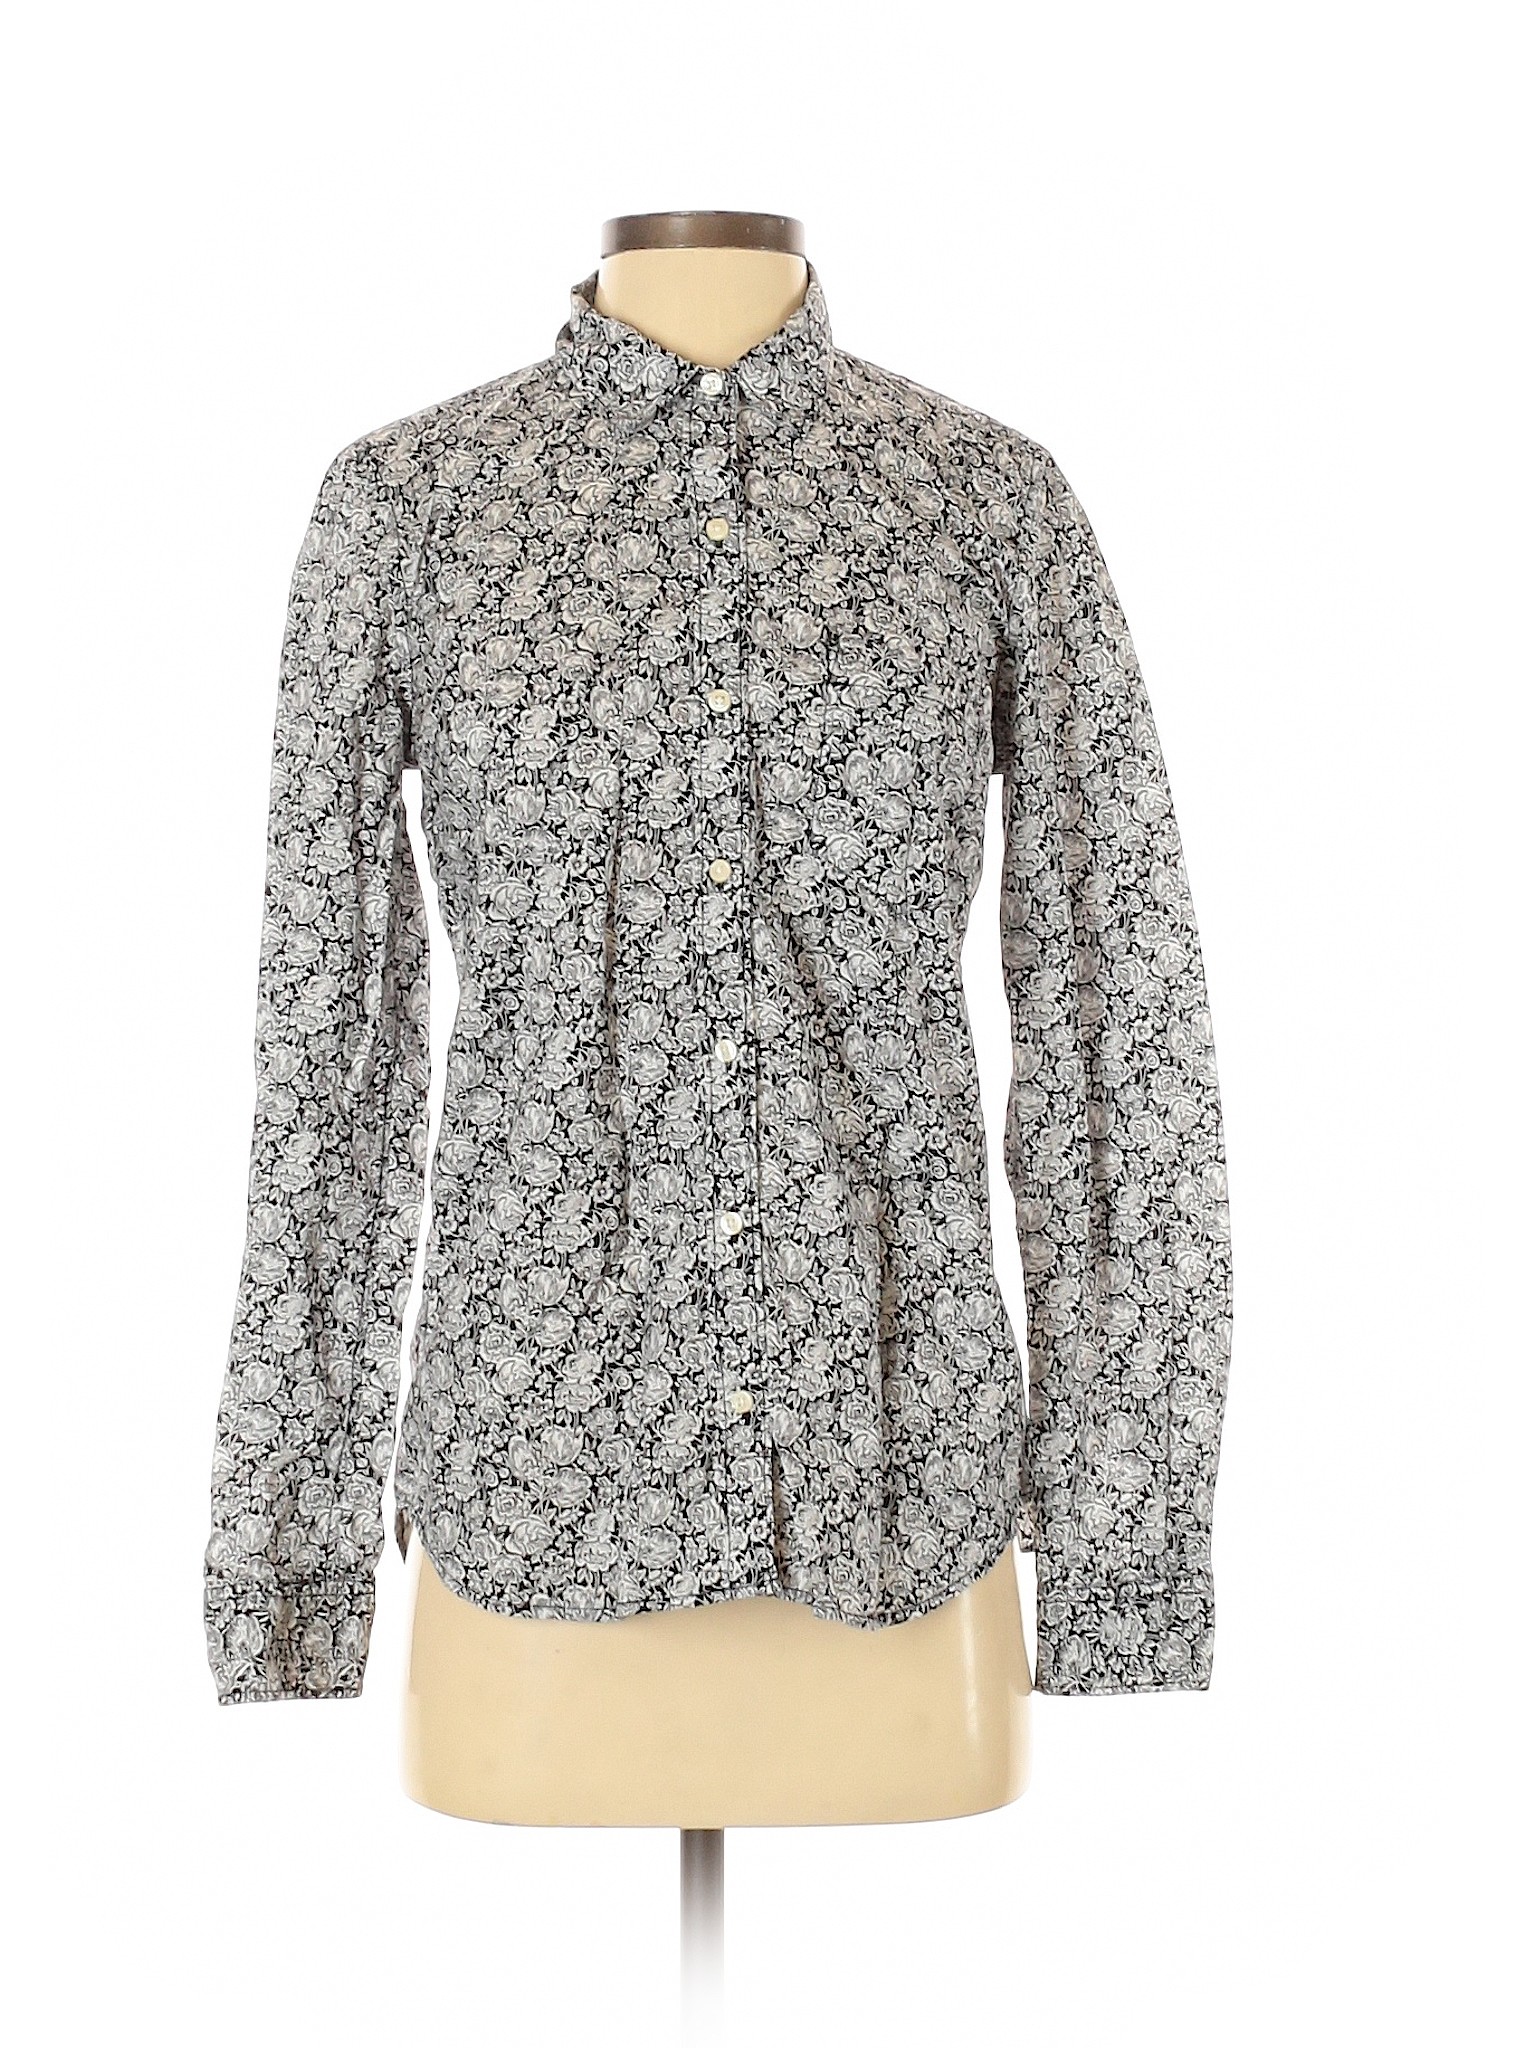 Gap Women Gray Long Sleeve Button-Down Shirt S | eBay